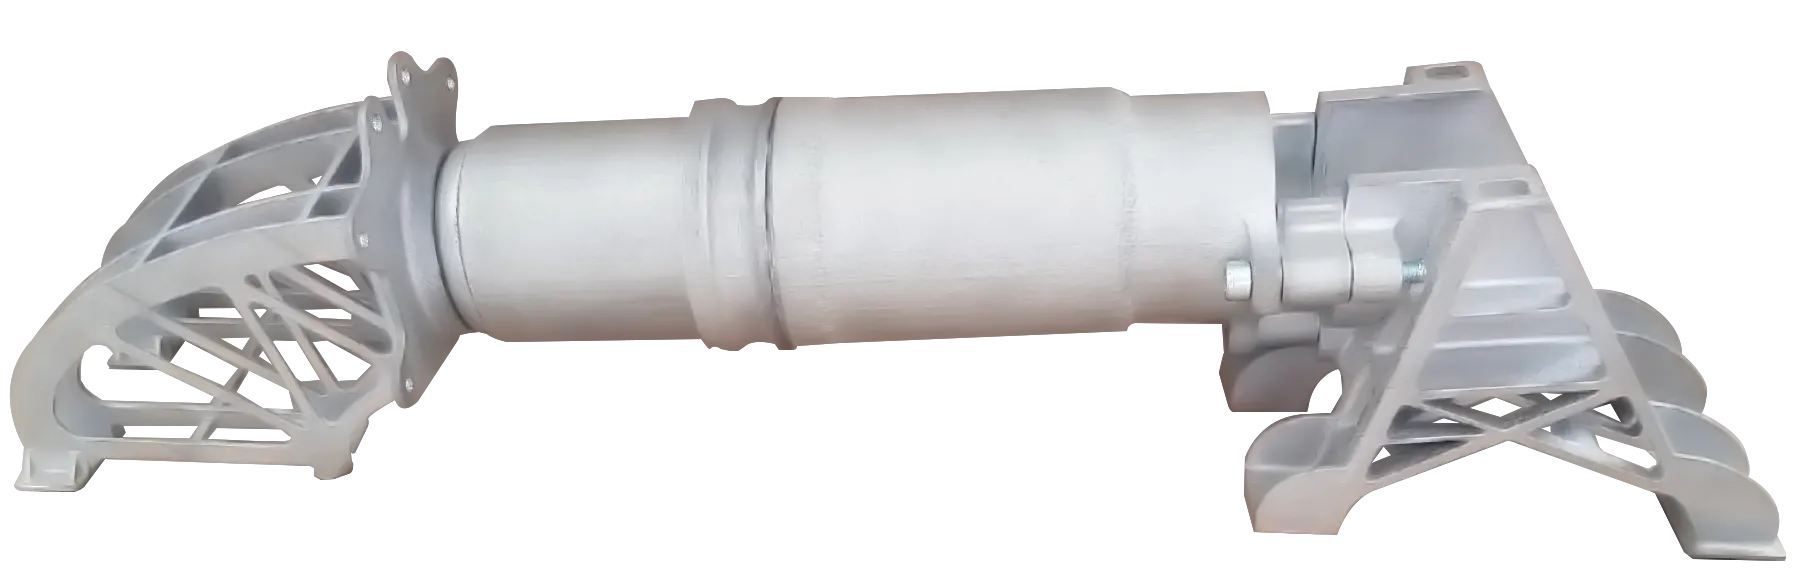 AlSi10Mg-Aluminium-Rocket-Structure-Aerospace